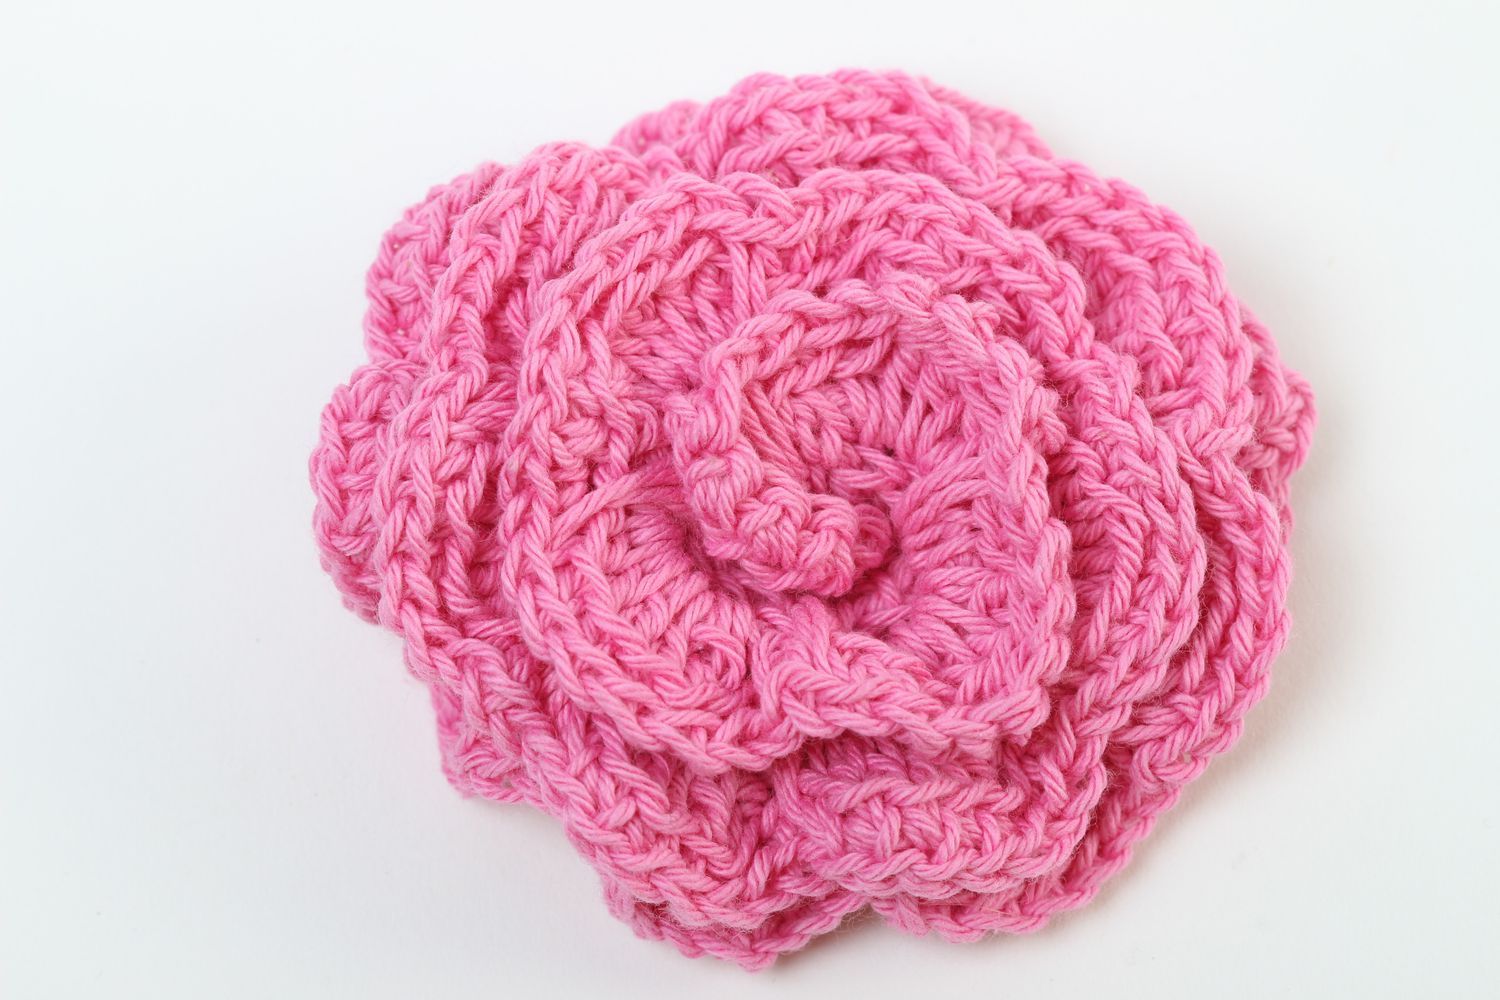 Handmade crocheted flower hair accessories craft supplies jewelry supplies
 photo 2